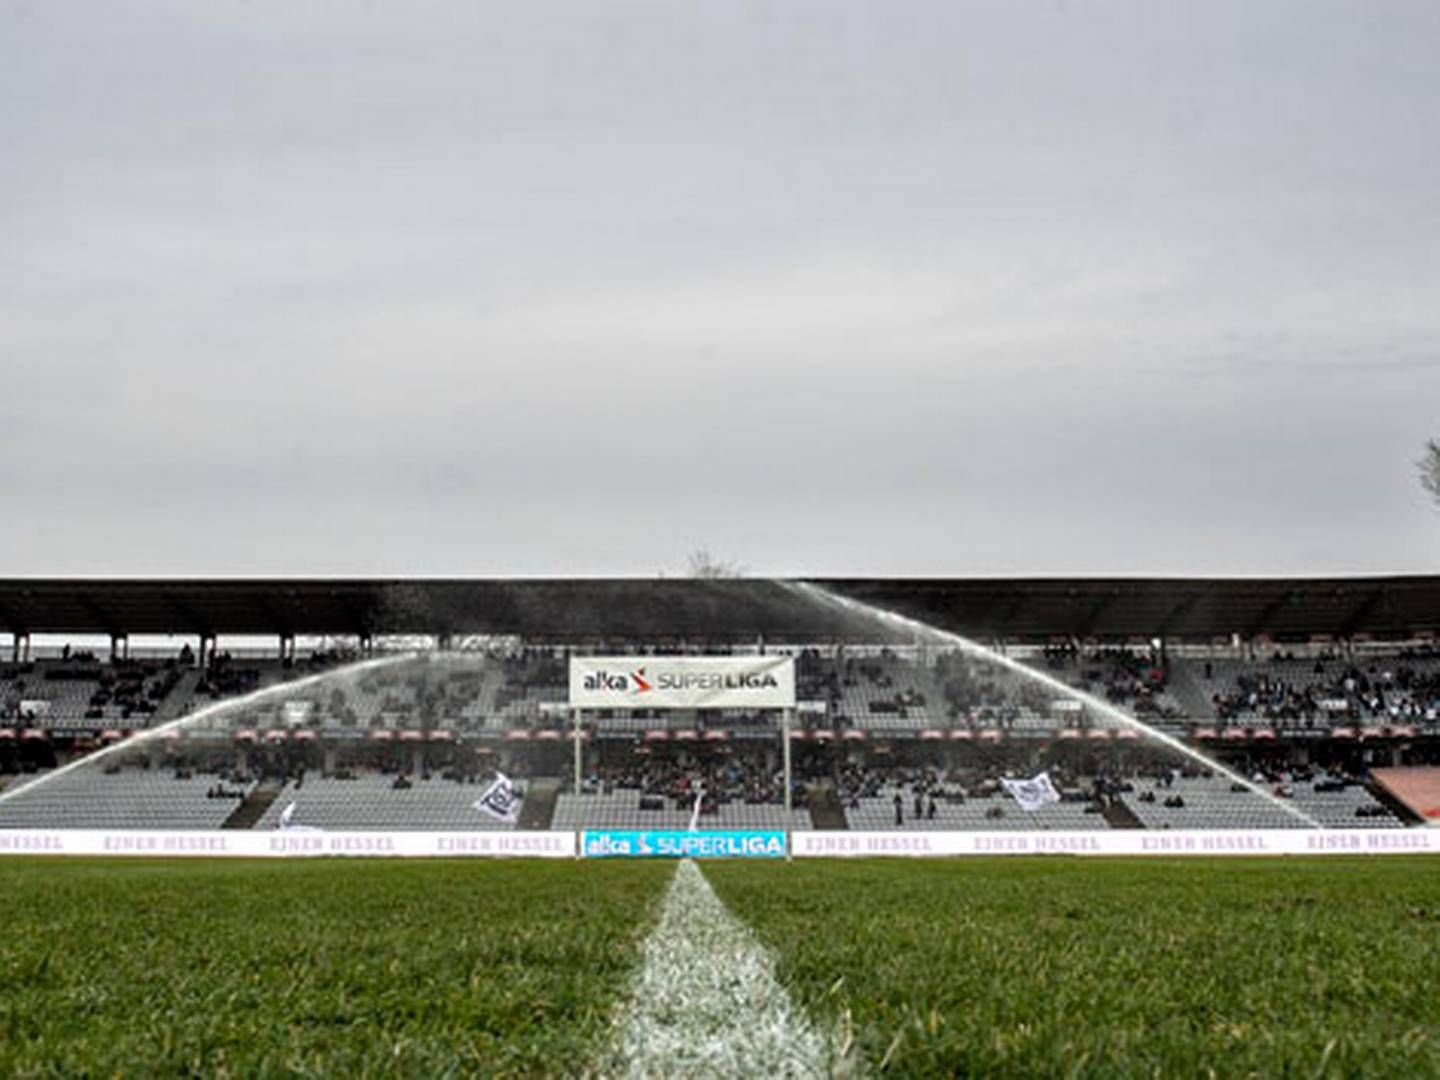 Fodboldstadionet Ceres Park i Aarhus. | Foto: Ritzau Scanpix/Henning Bagger.